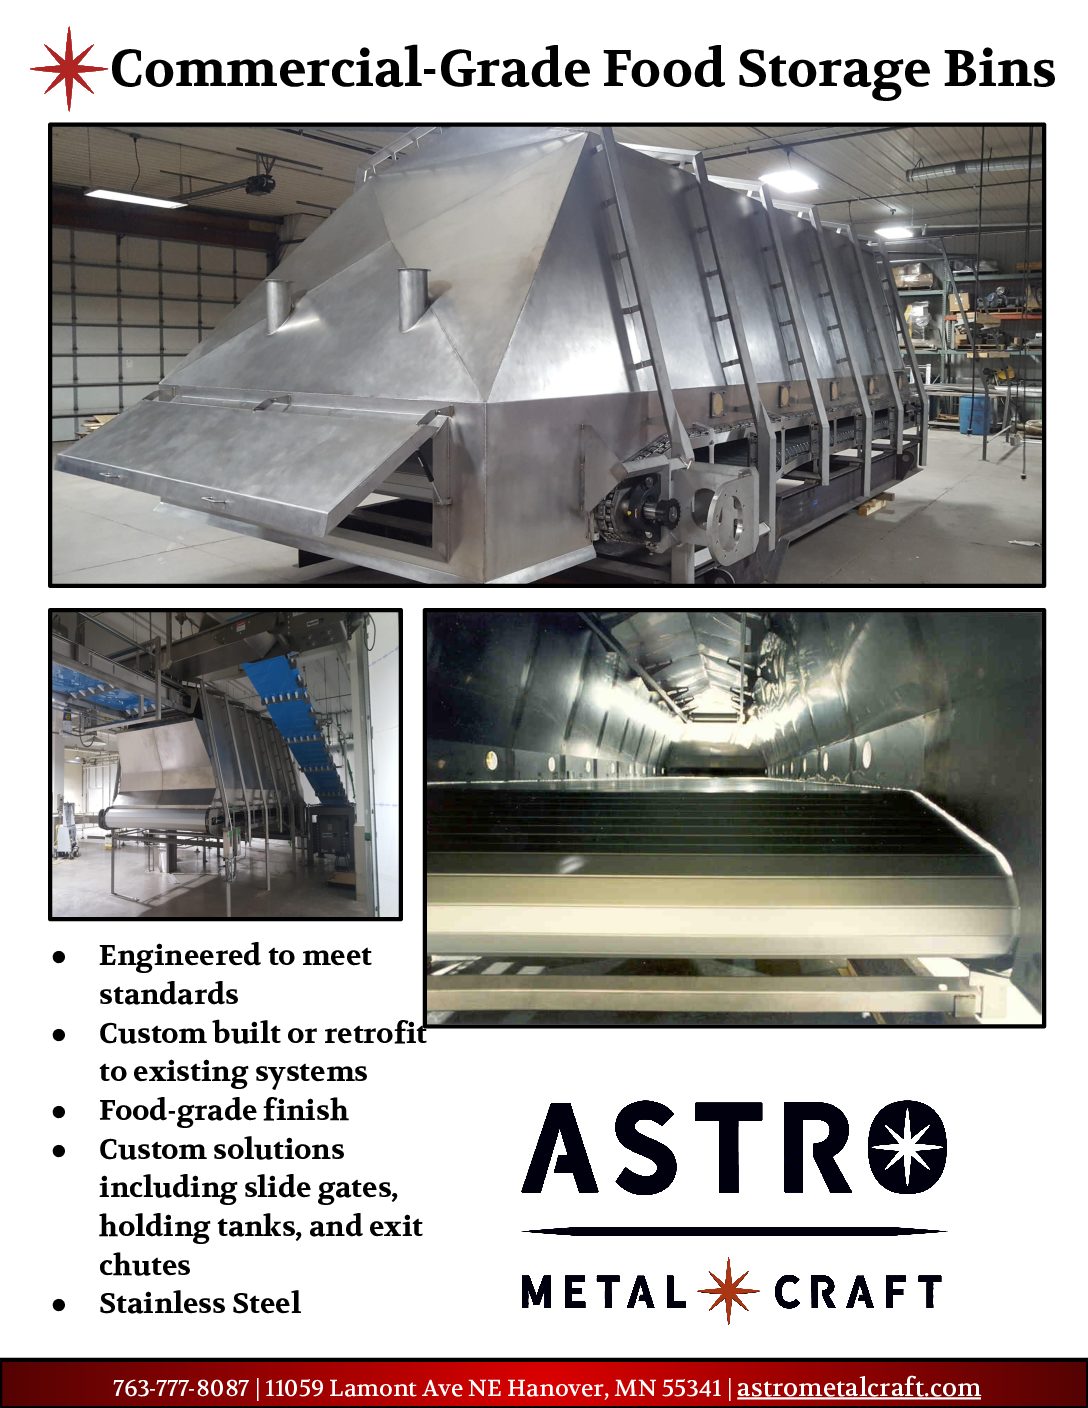 Astro Metal Craft – Commercial Food Grade Food Storage Bins Line Card